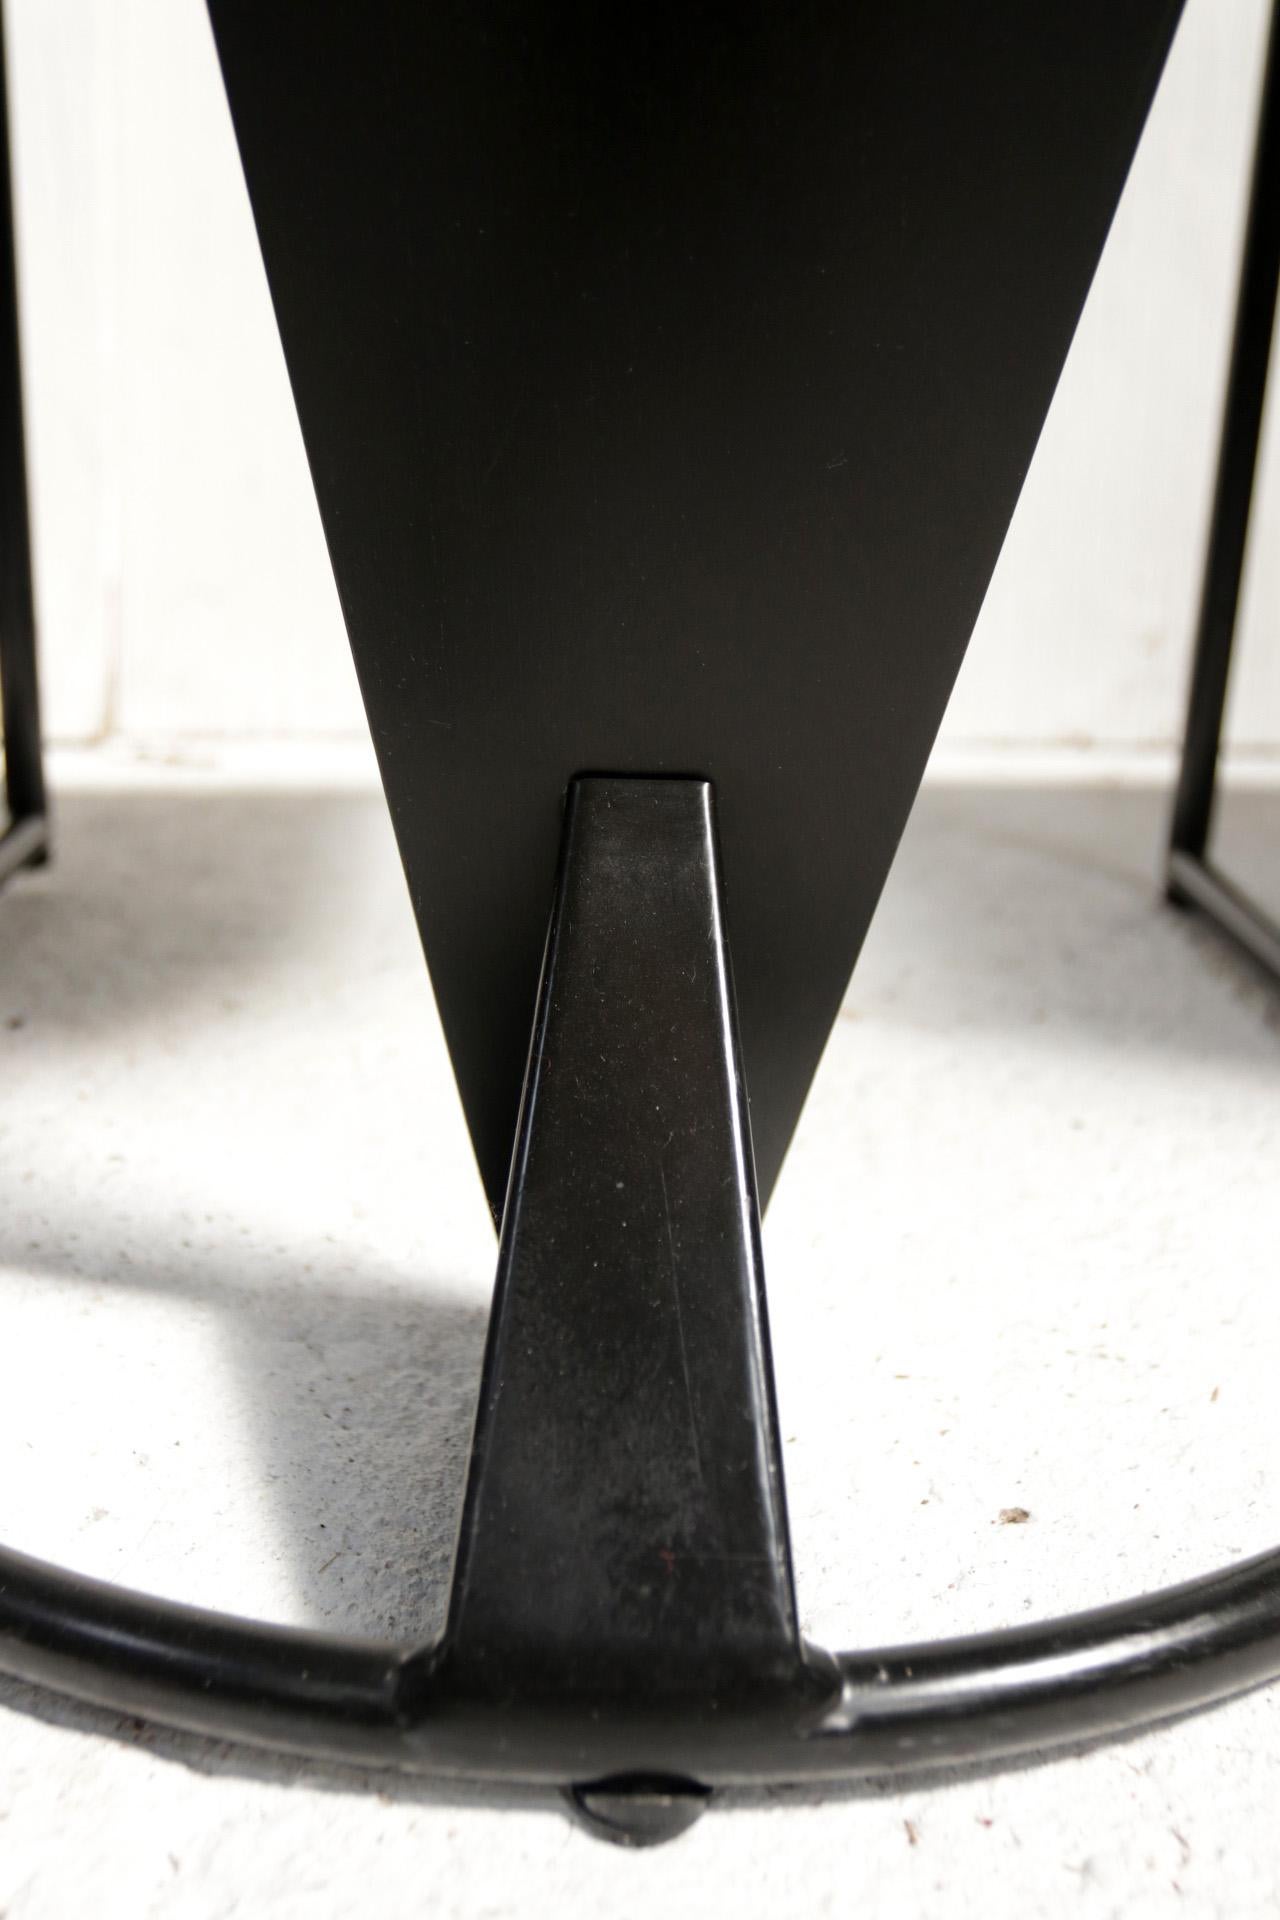 Dutch Design Harvink Zino Memphis Style Chairs Black 2